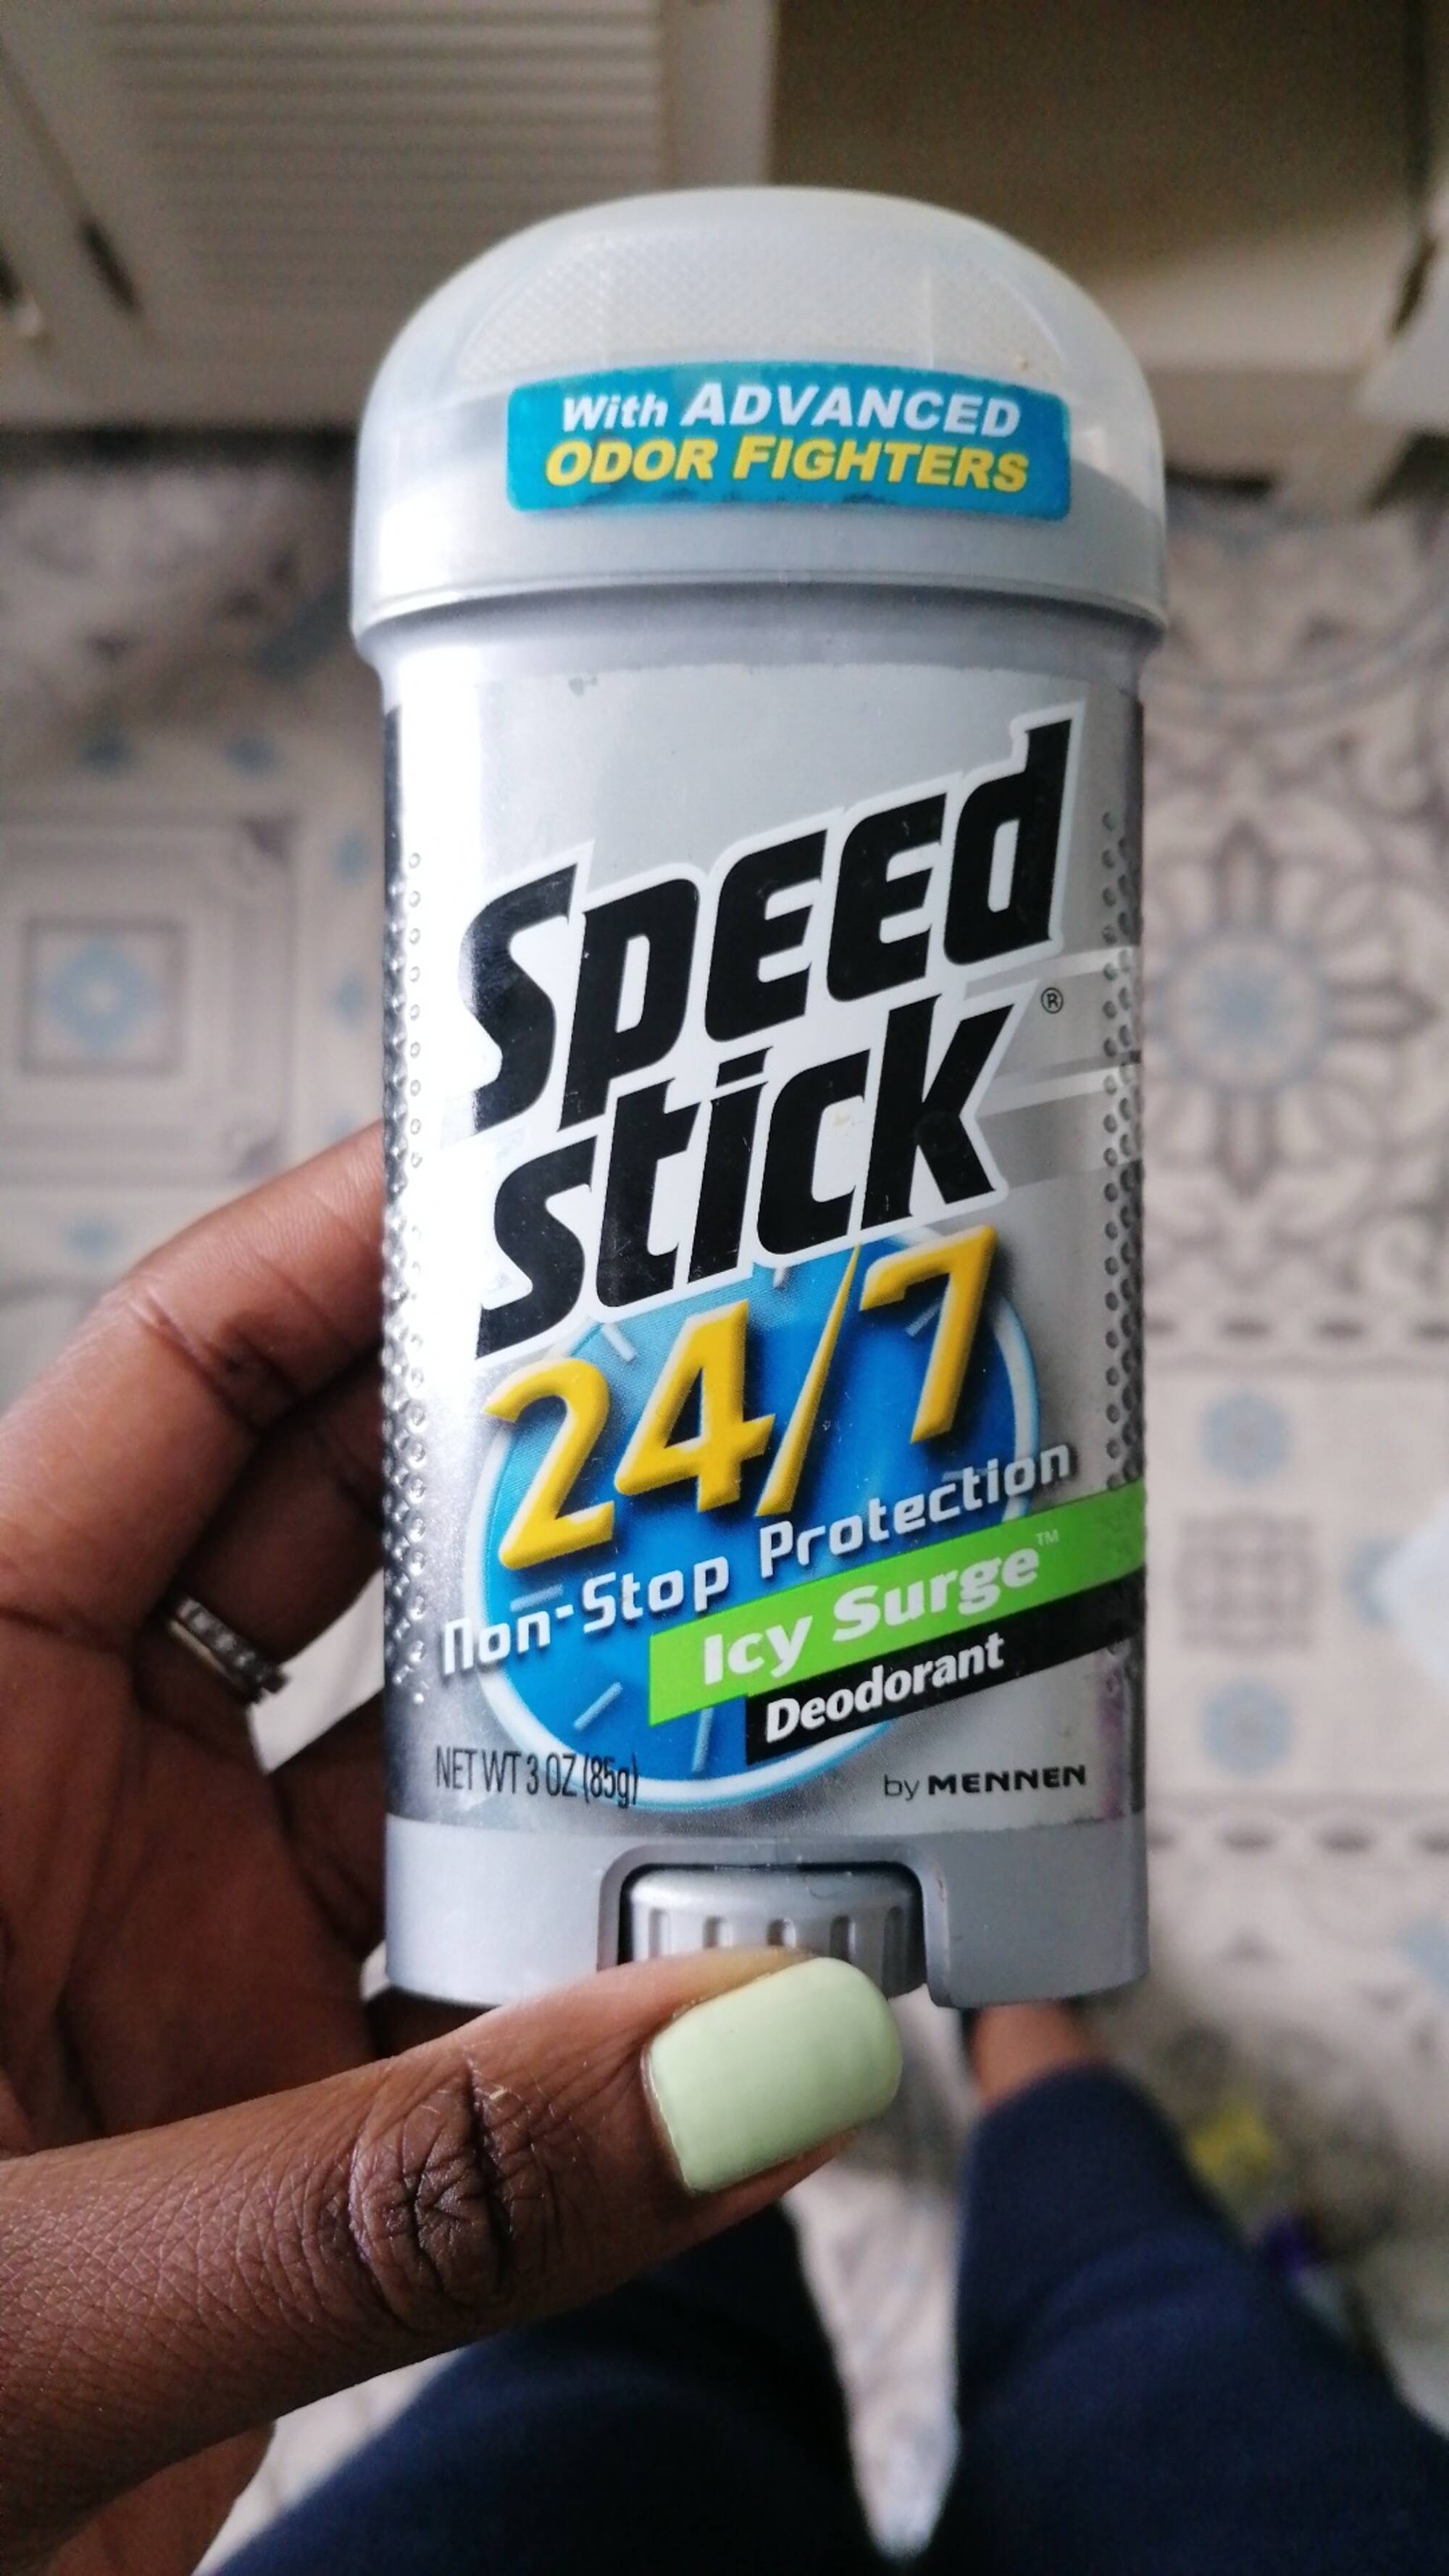 SPEED STICK - Icy surge - Déodorant 24/7